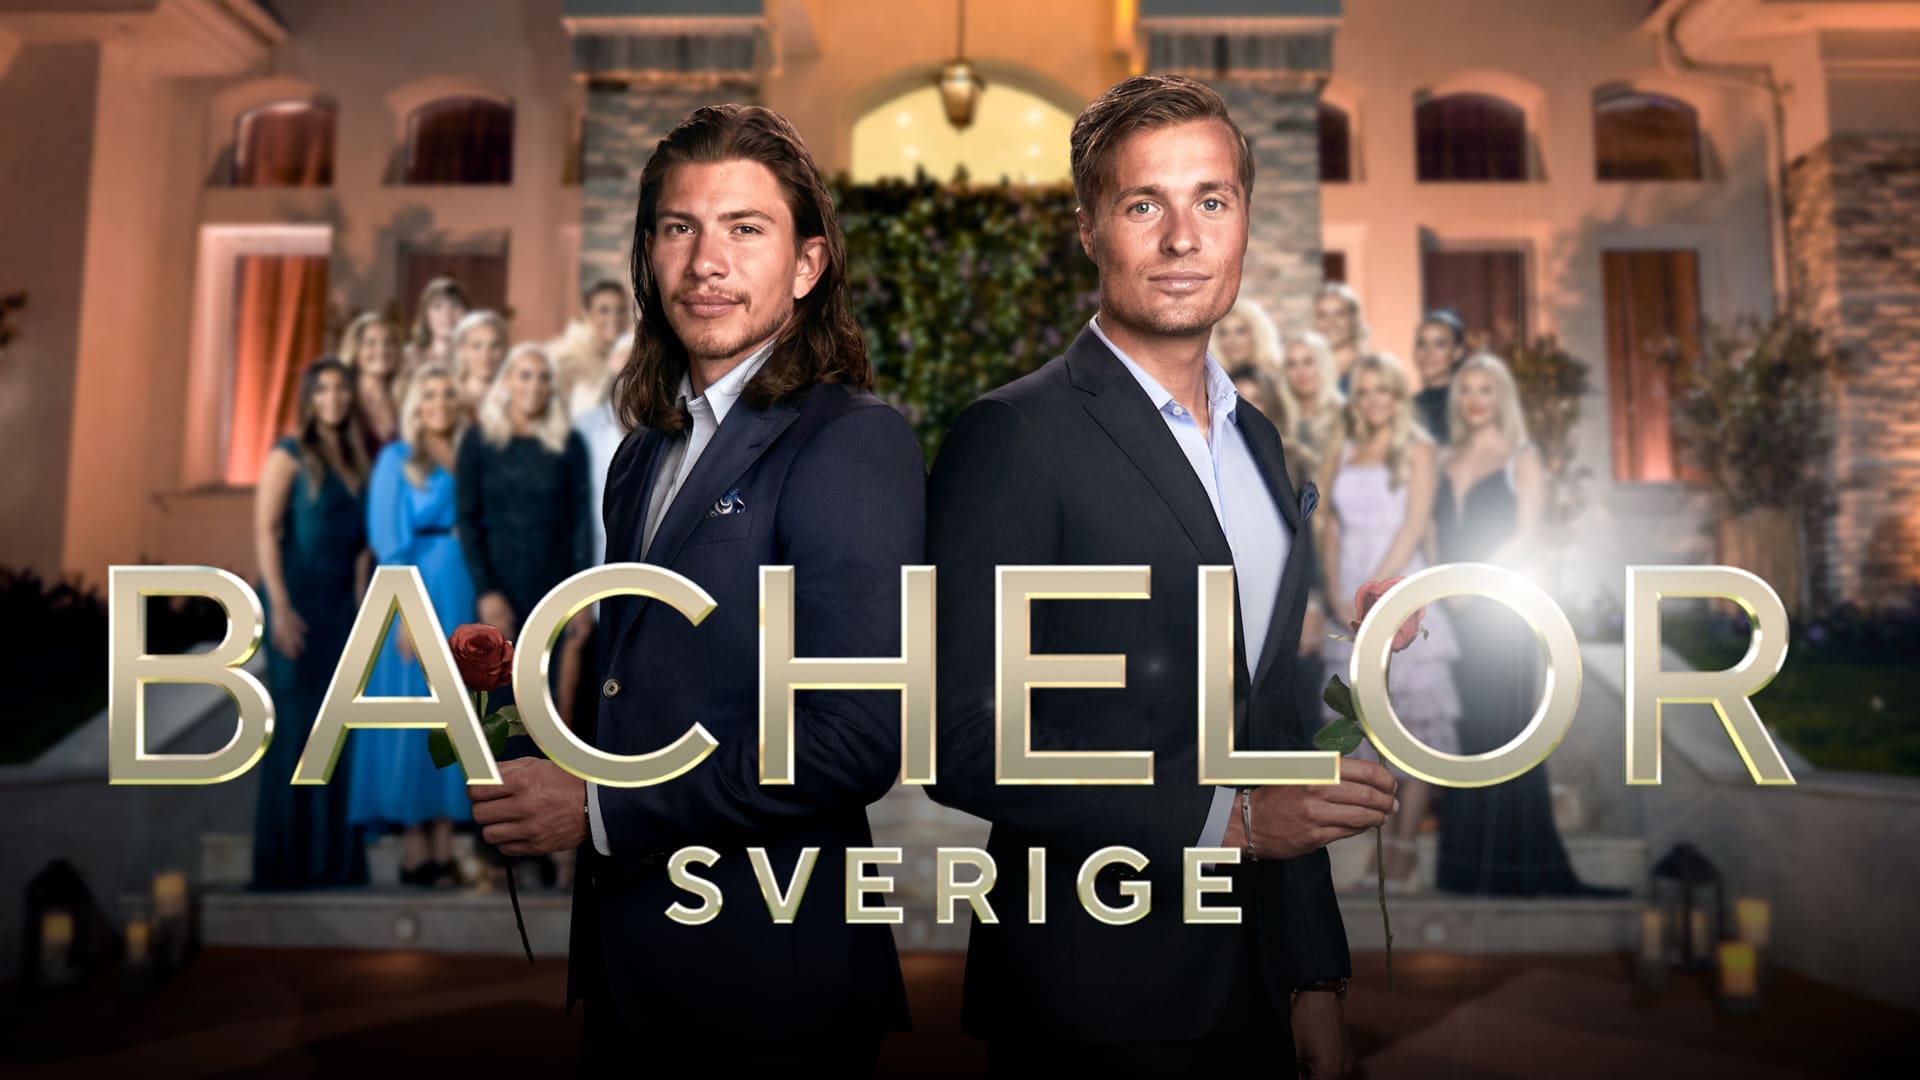 Bachelor Sverige poster